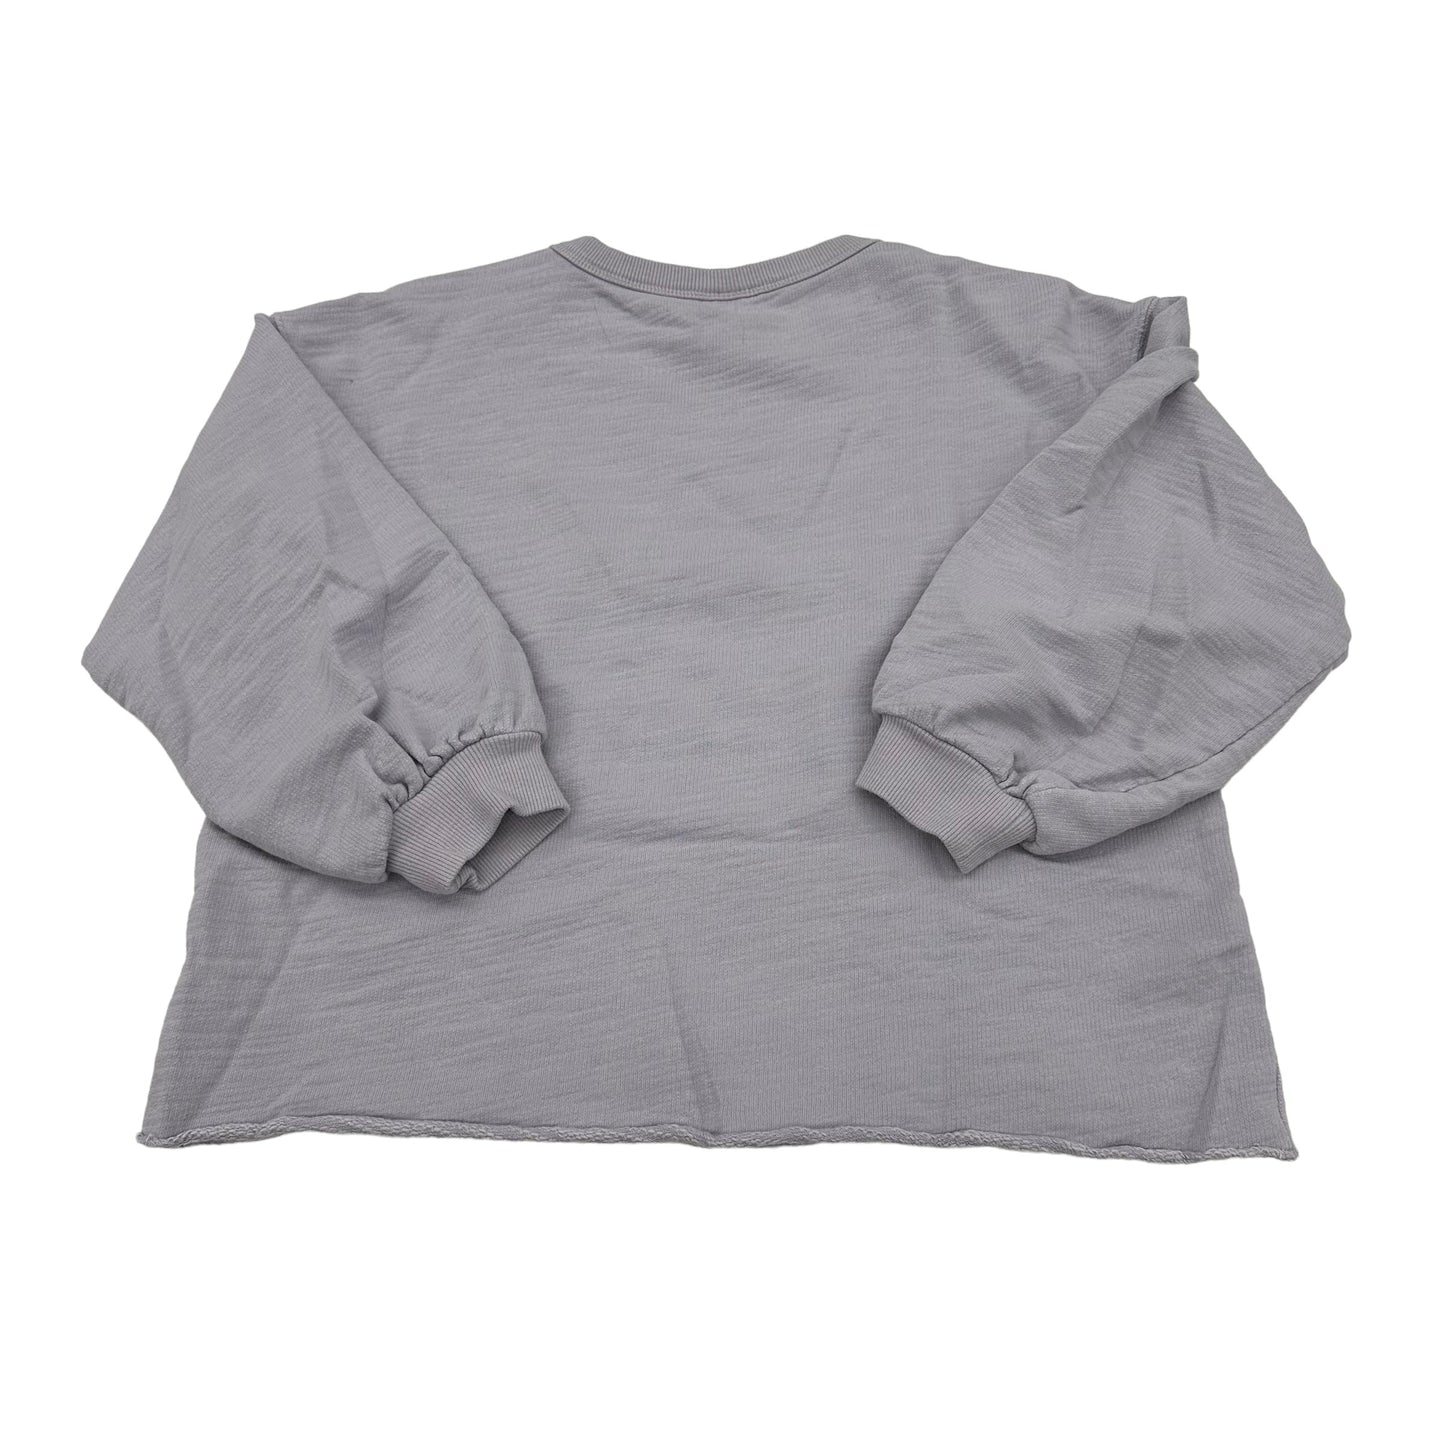 Sweatshirt Crewneck By Universal Thread  Size: L